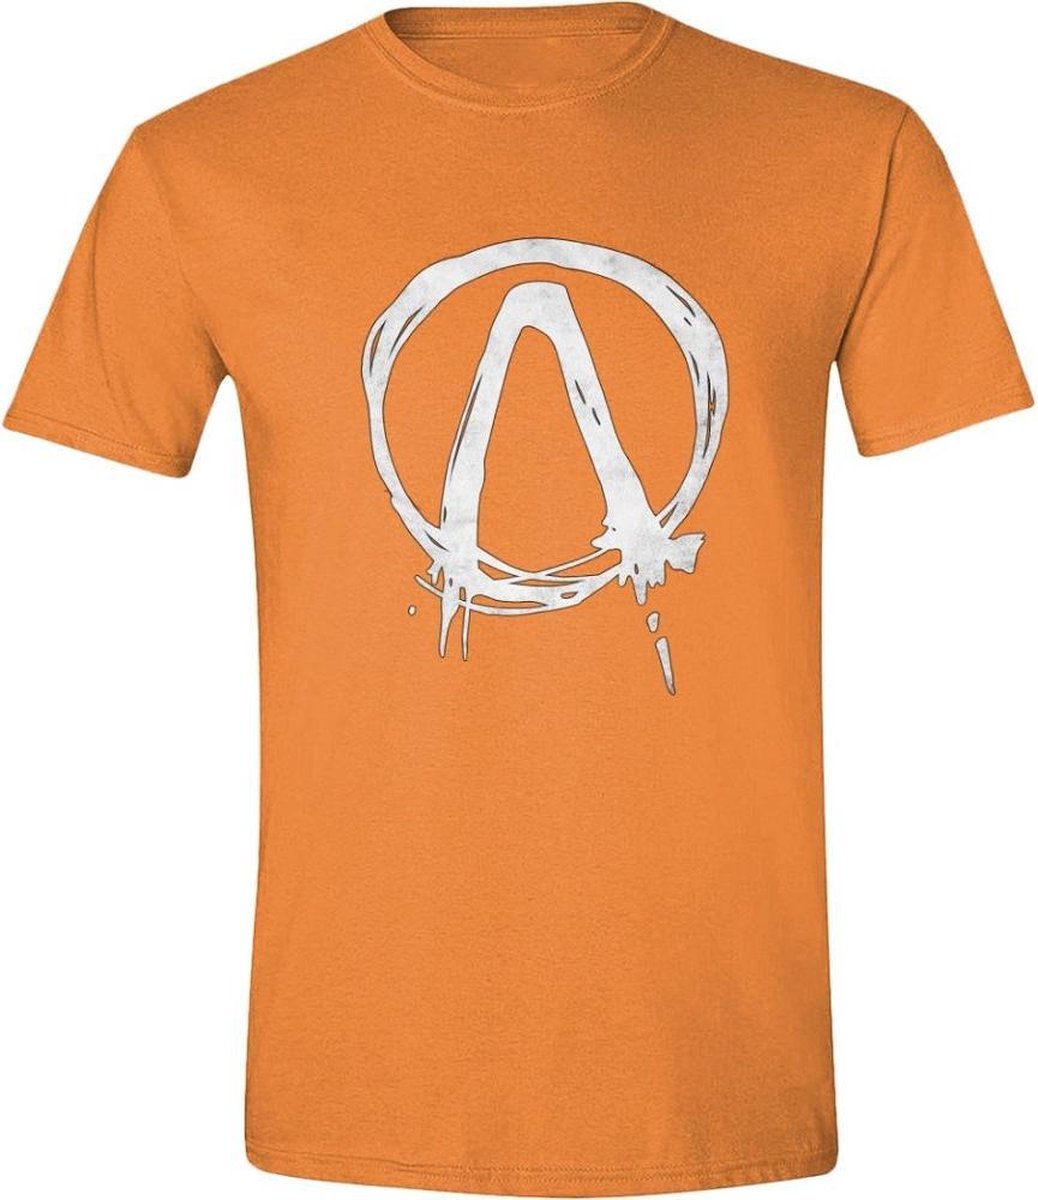 Borderlands - Dripping Logo Men T-Shirt - Orange - M